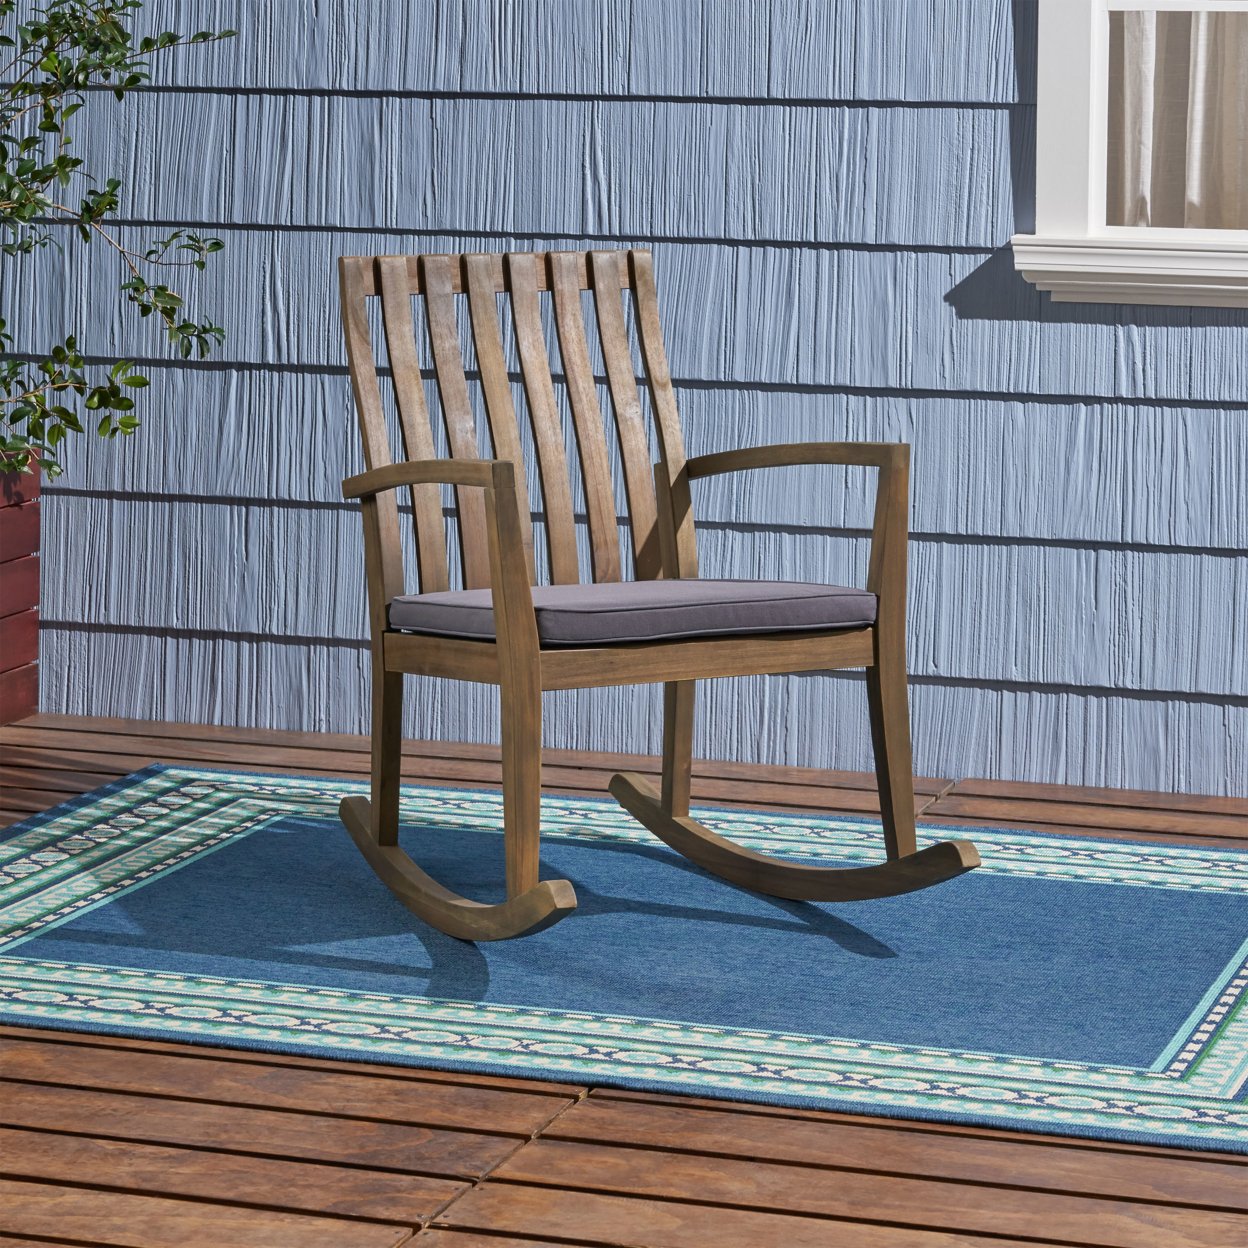 Muriel Outdoor Acacia Wood Rustic Style Rocking Chair With Cushions - Teak Finish + Dark Gray Cushion